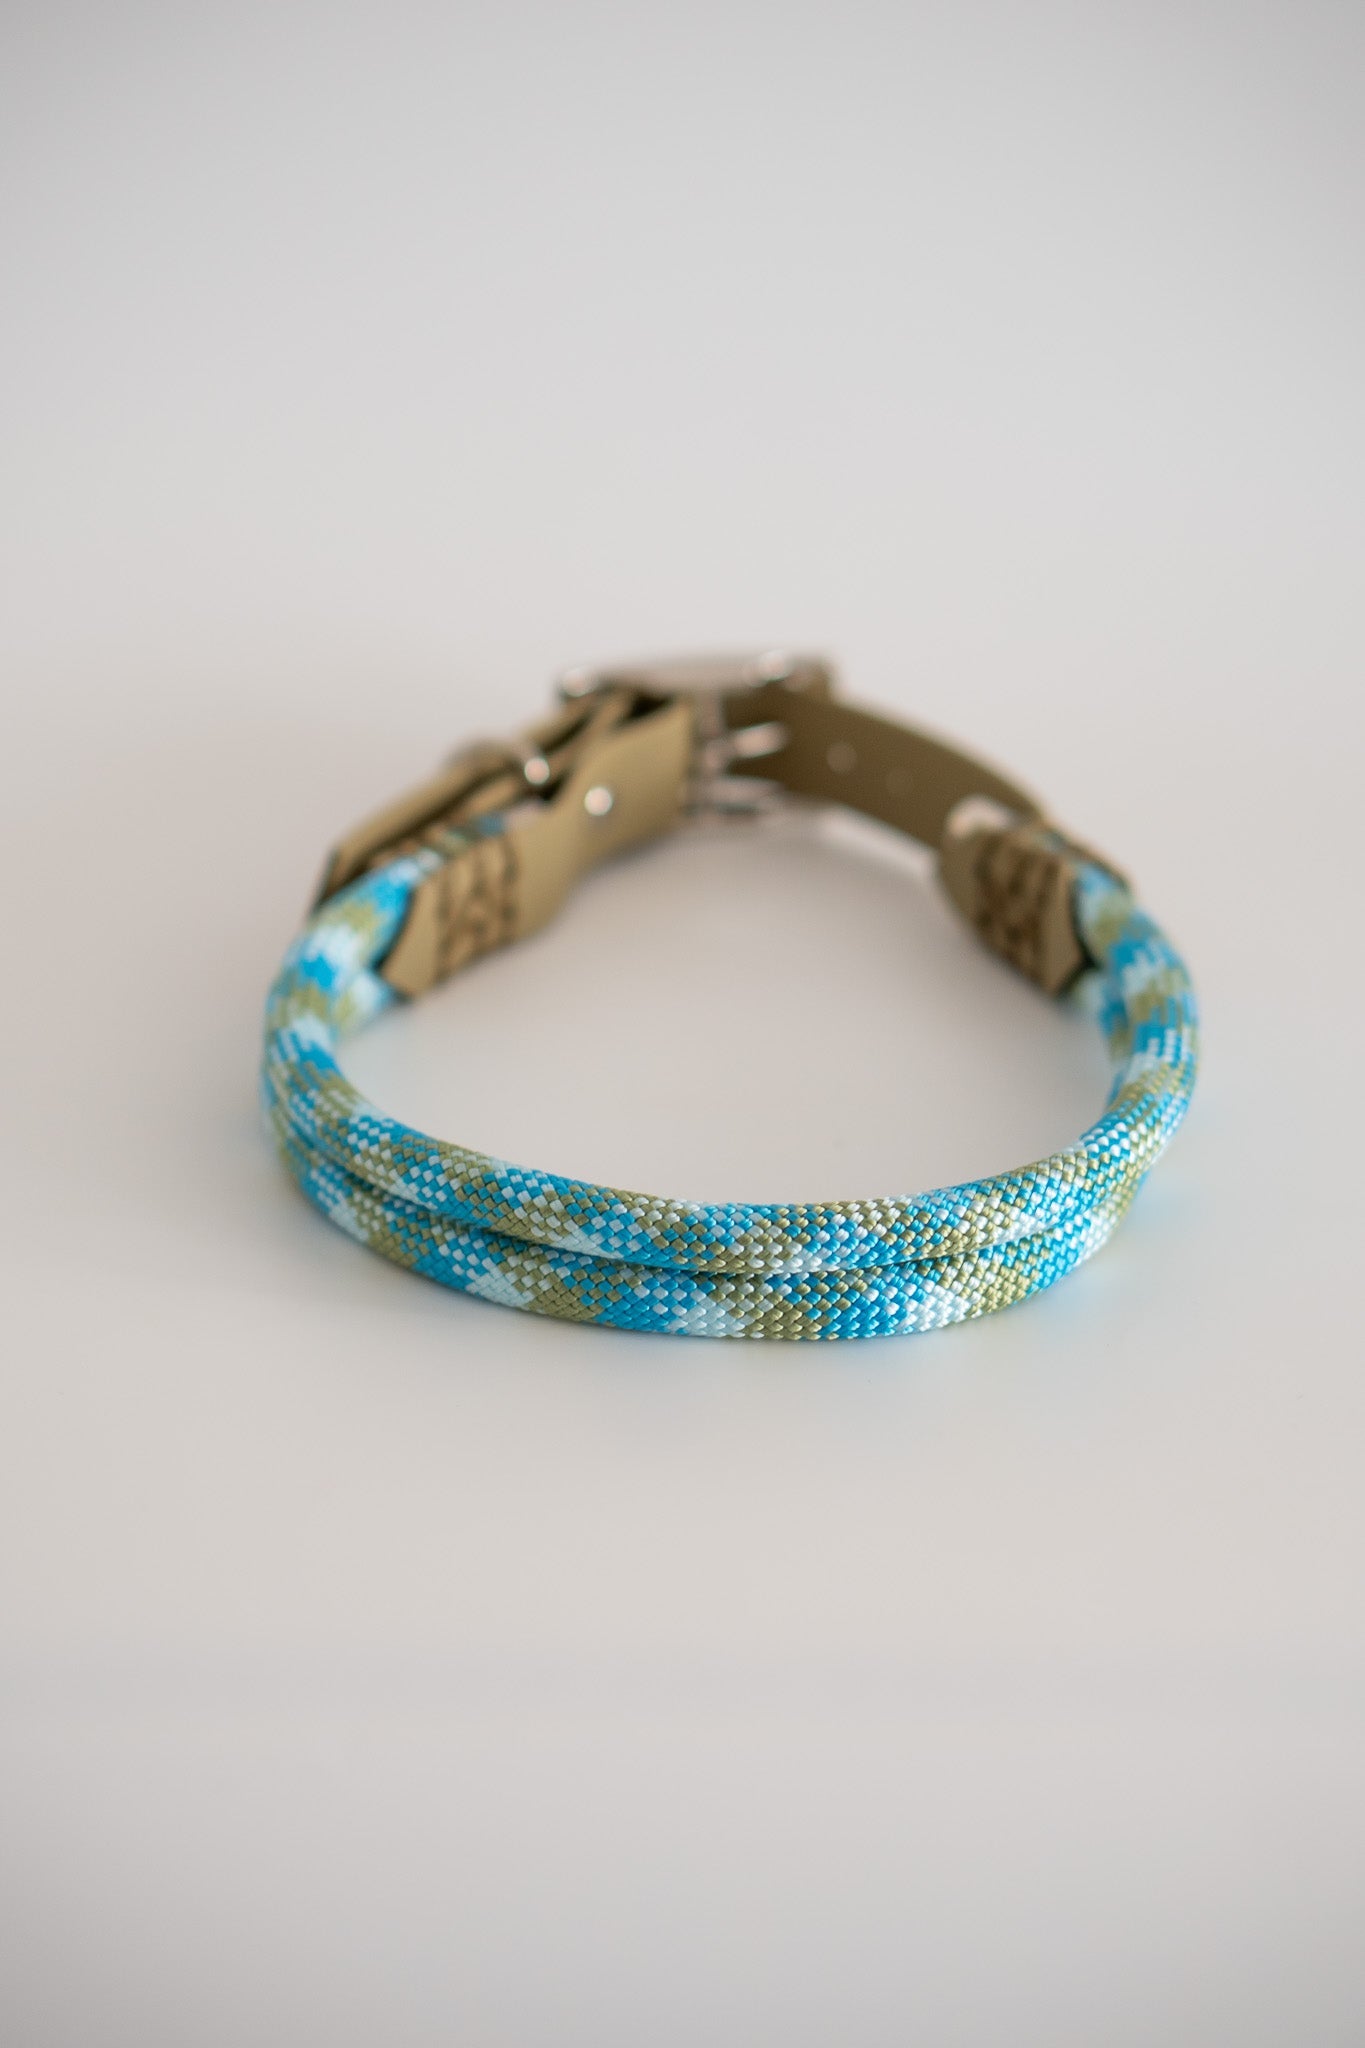 Mabel double Tau Halsband | hellblau-blau-grün & khaki | 45-53cm | handgemacht - hundgemacht